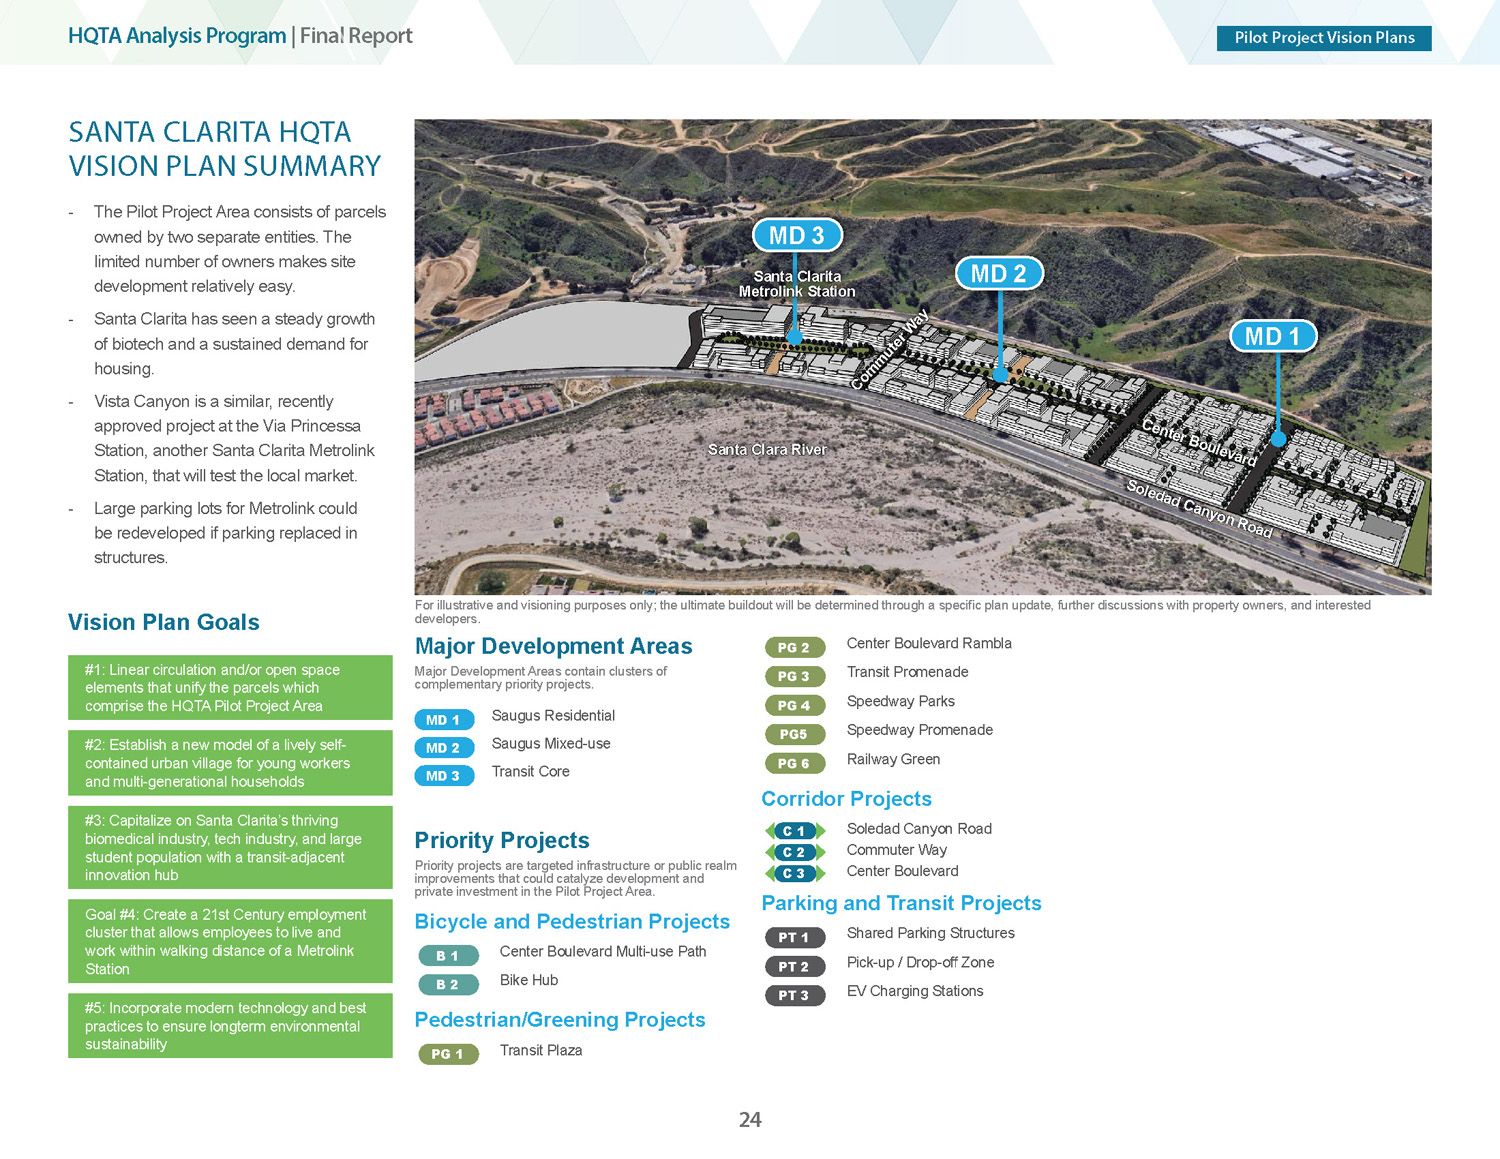 Overview of Santa Clarita Vision Plan